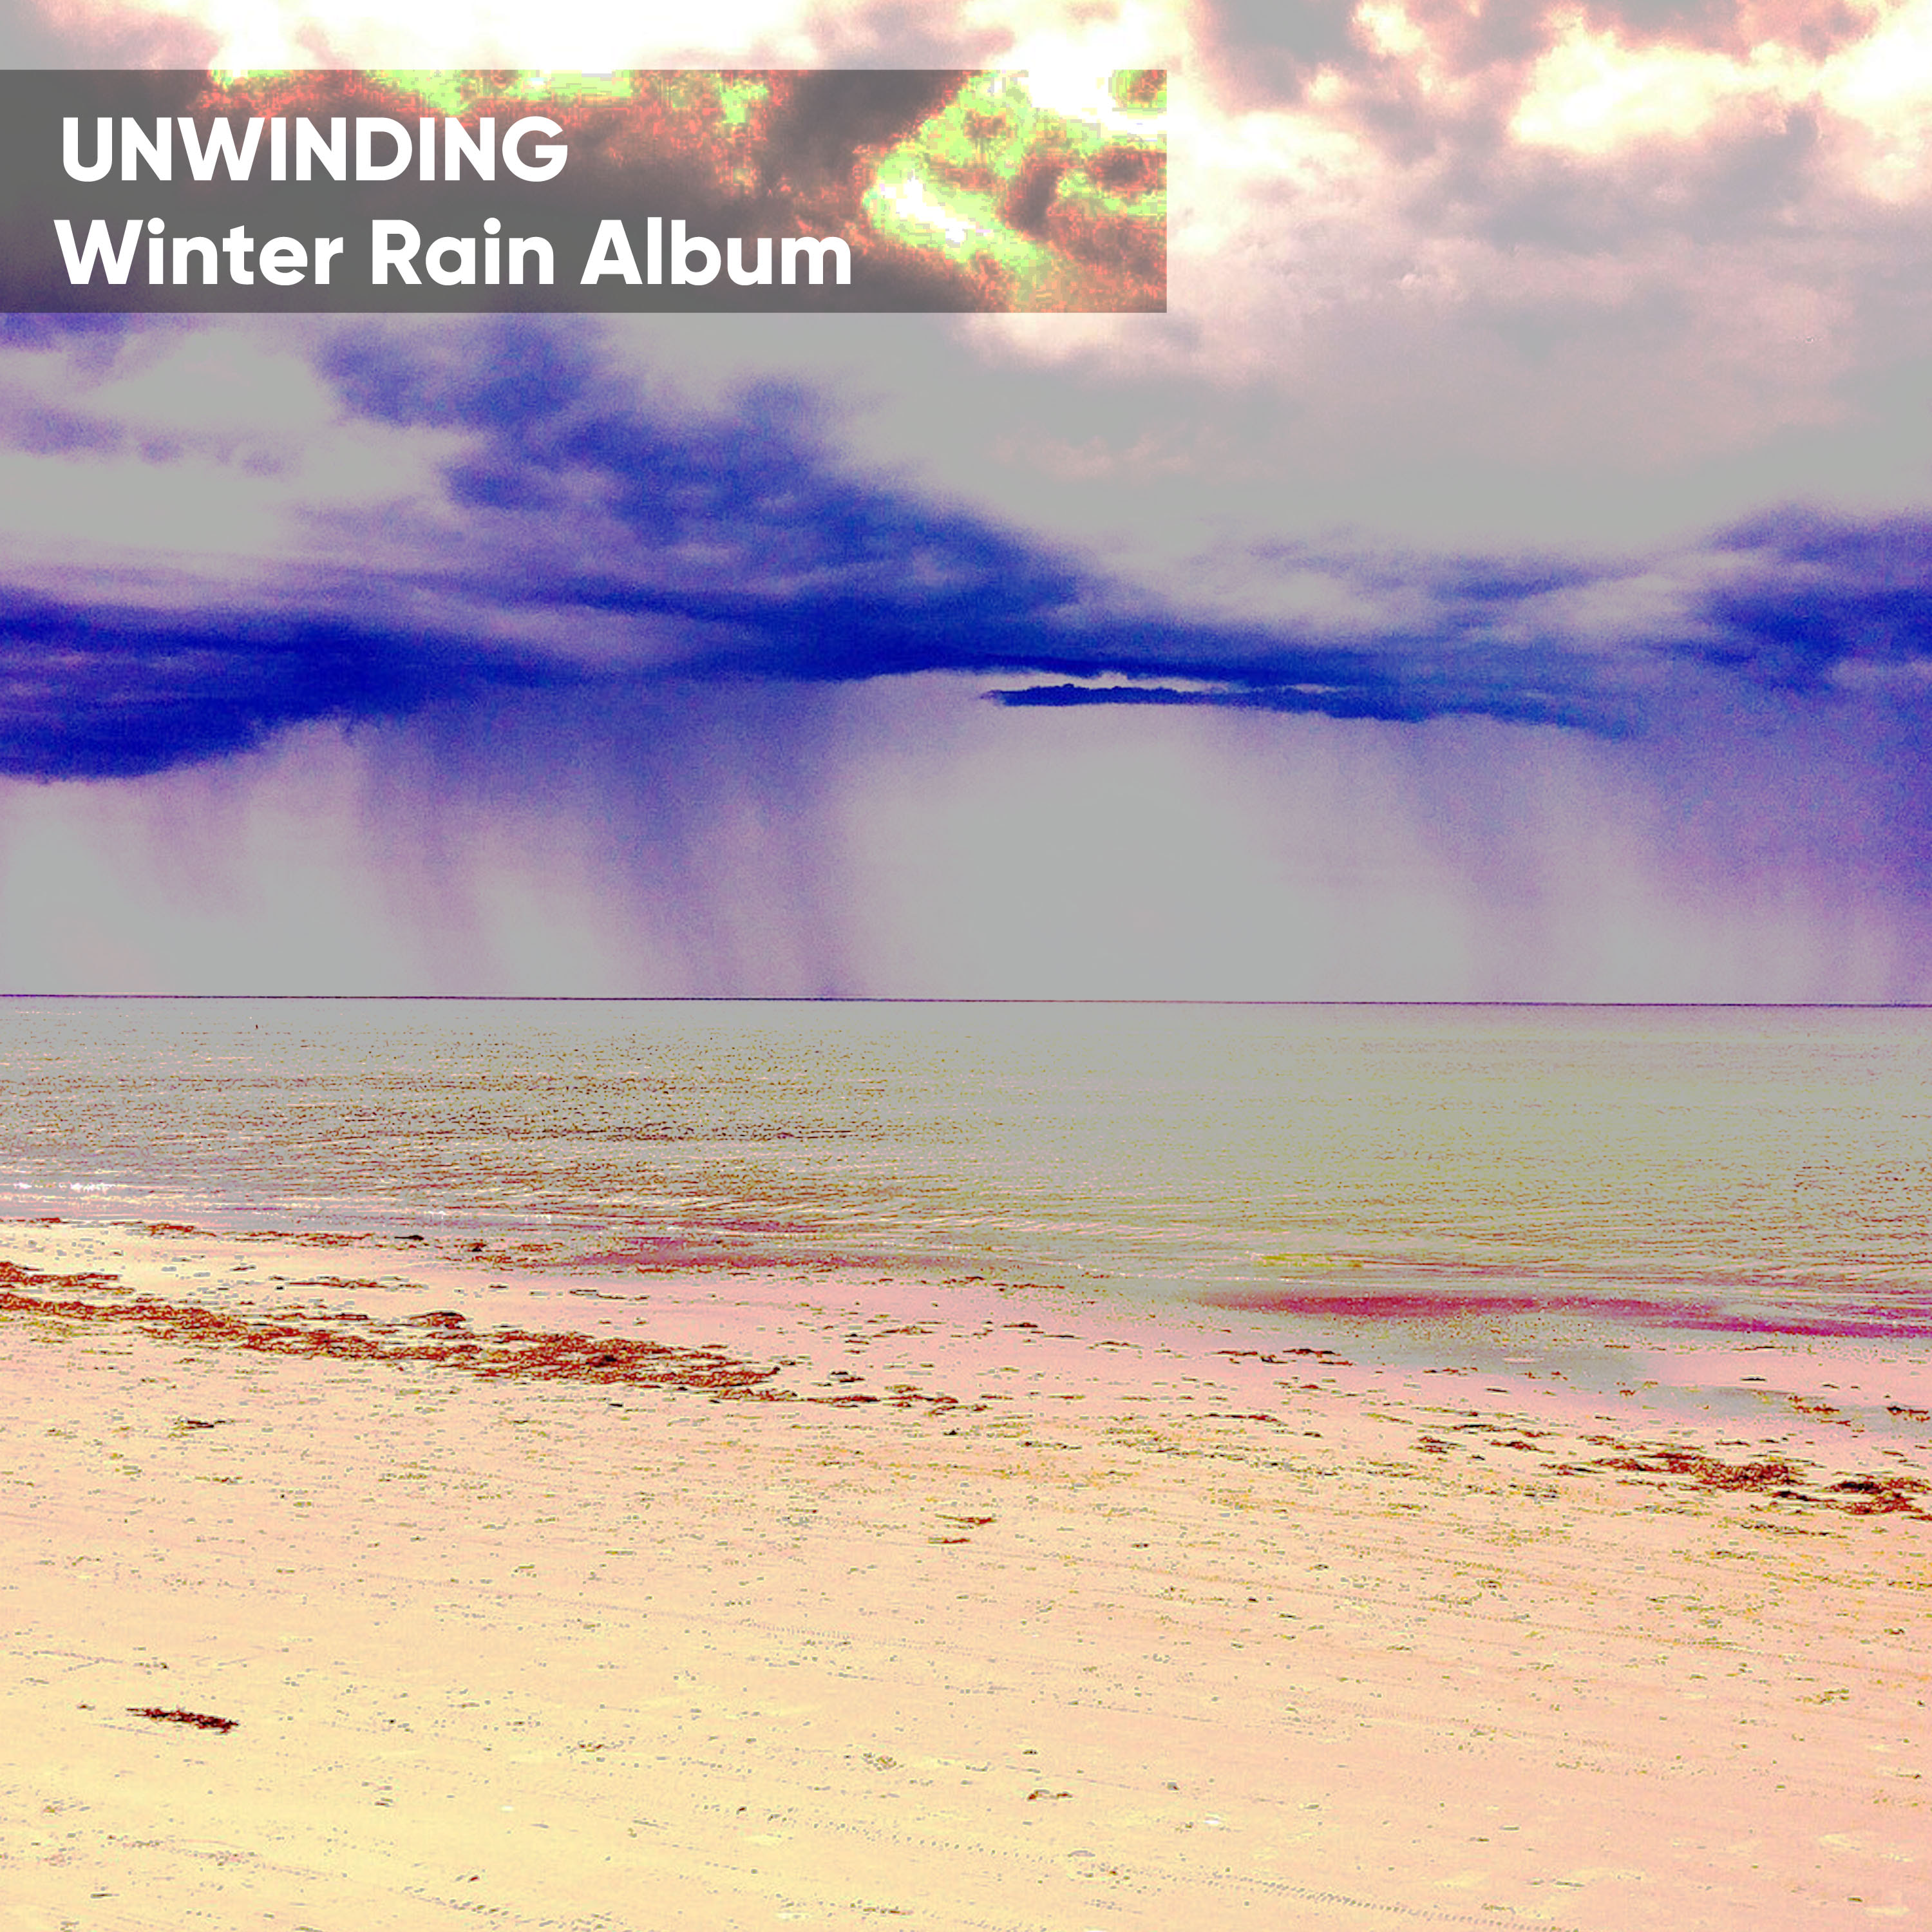 Unwinding Winter Rain Album